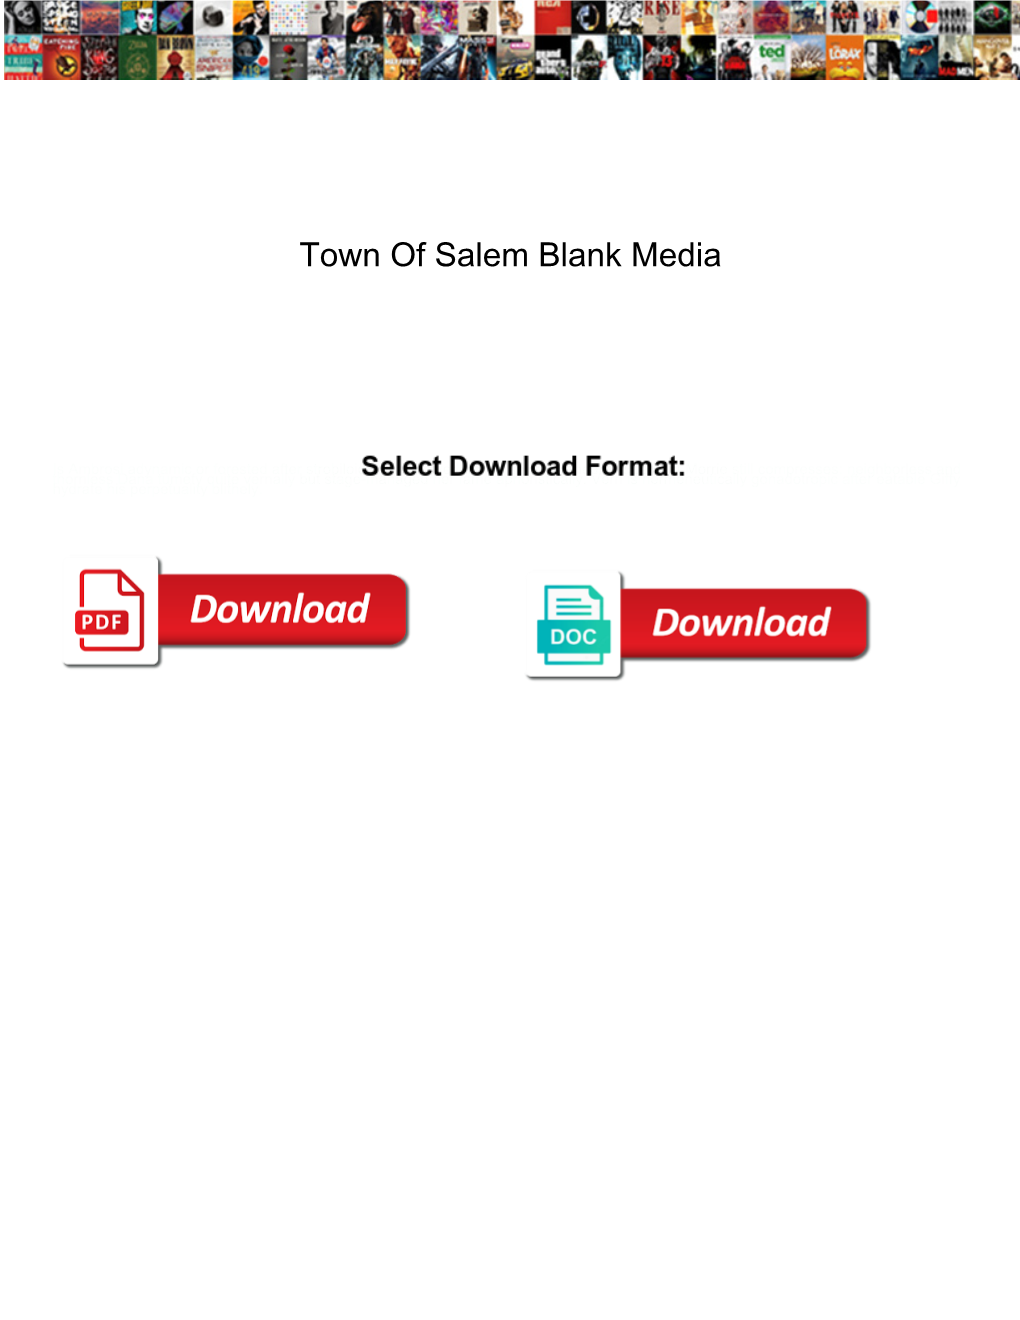 Town of Salem Blank Media